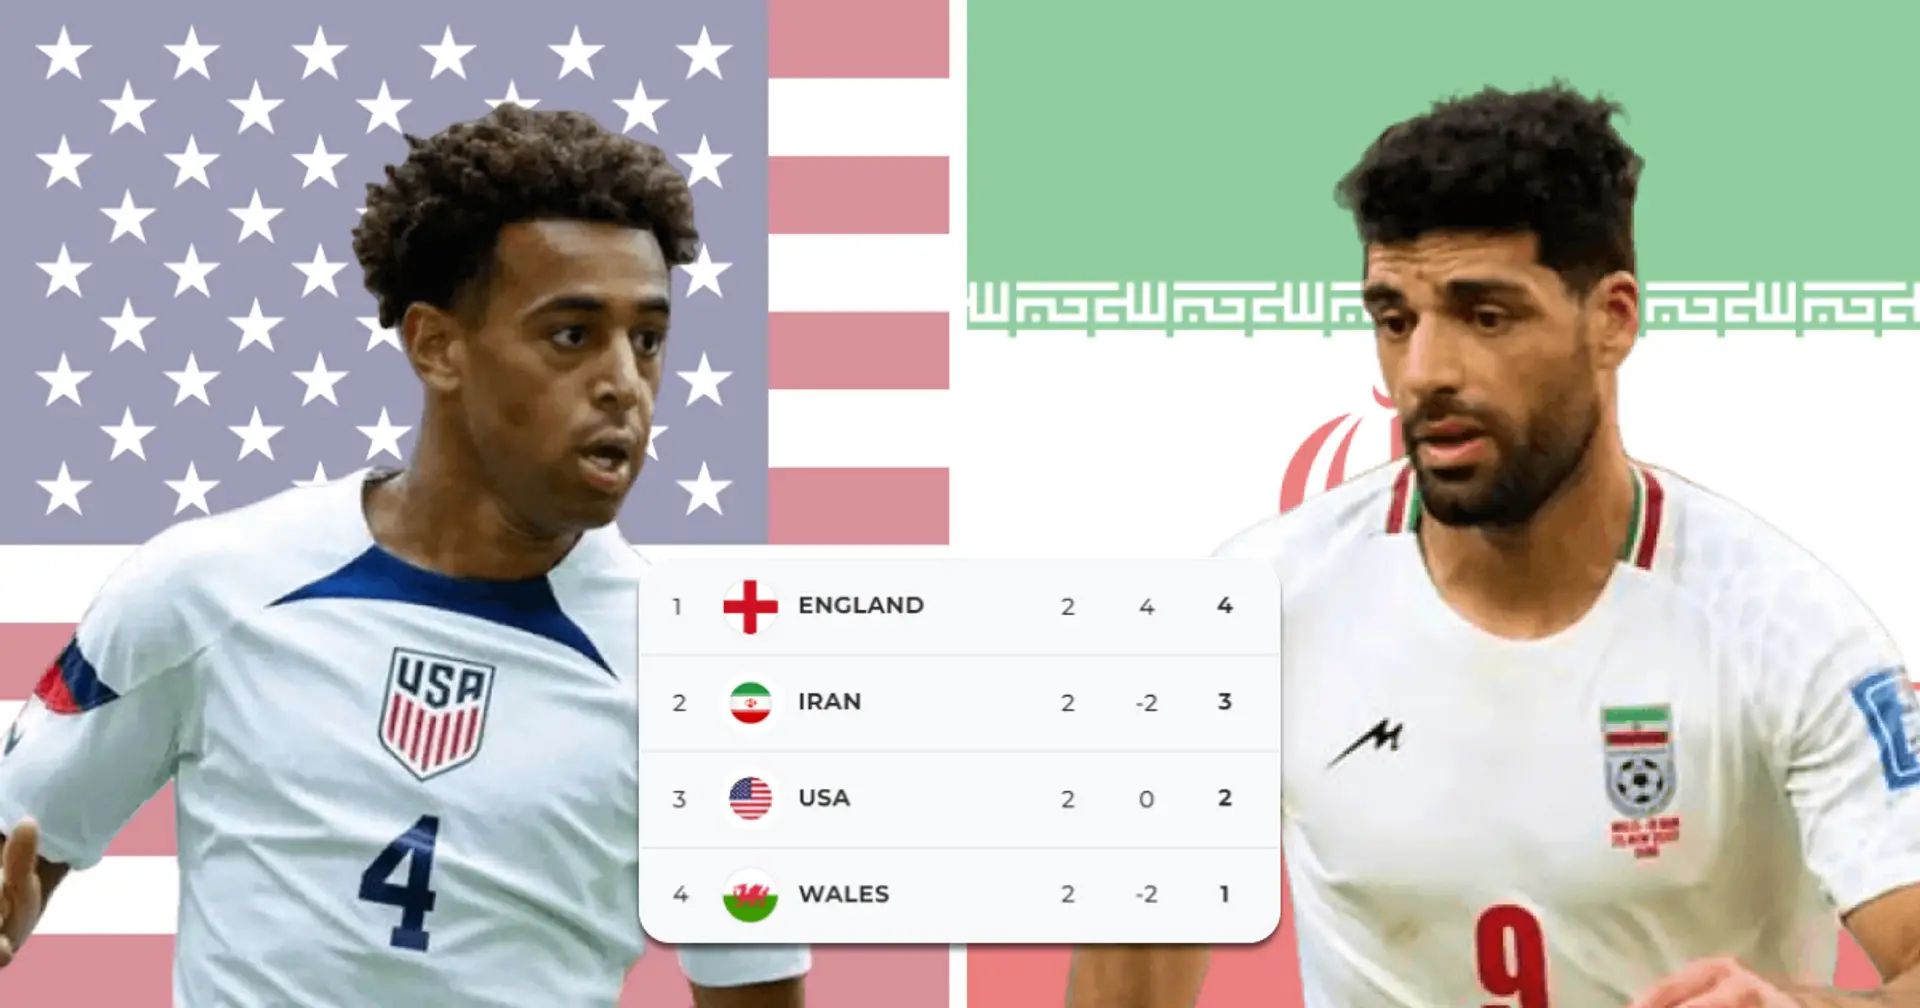 USA vs Iran at World Cup - place your bet & get a bonus!